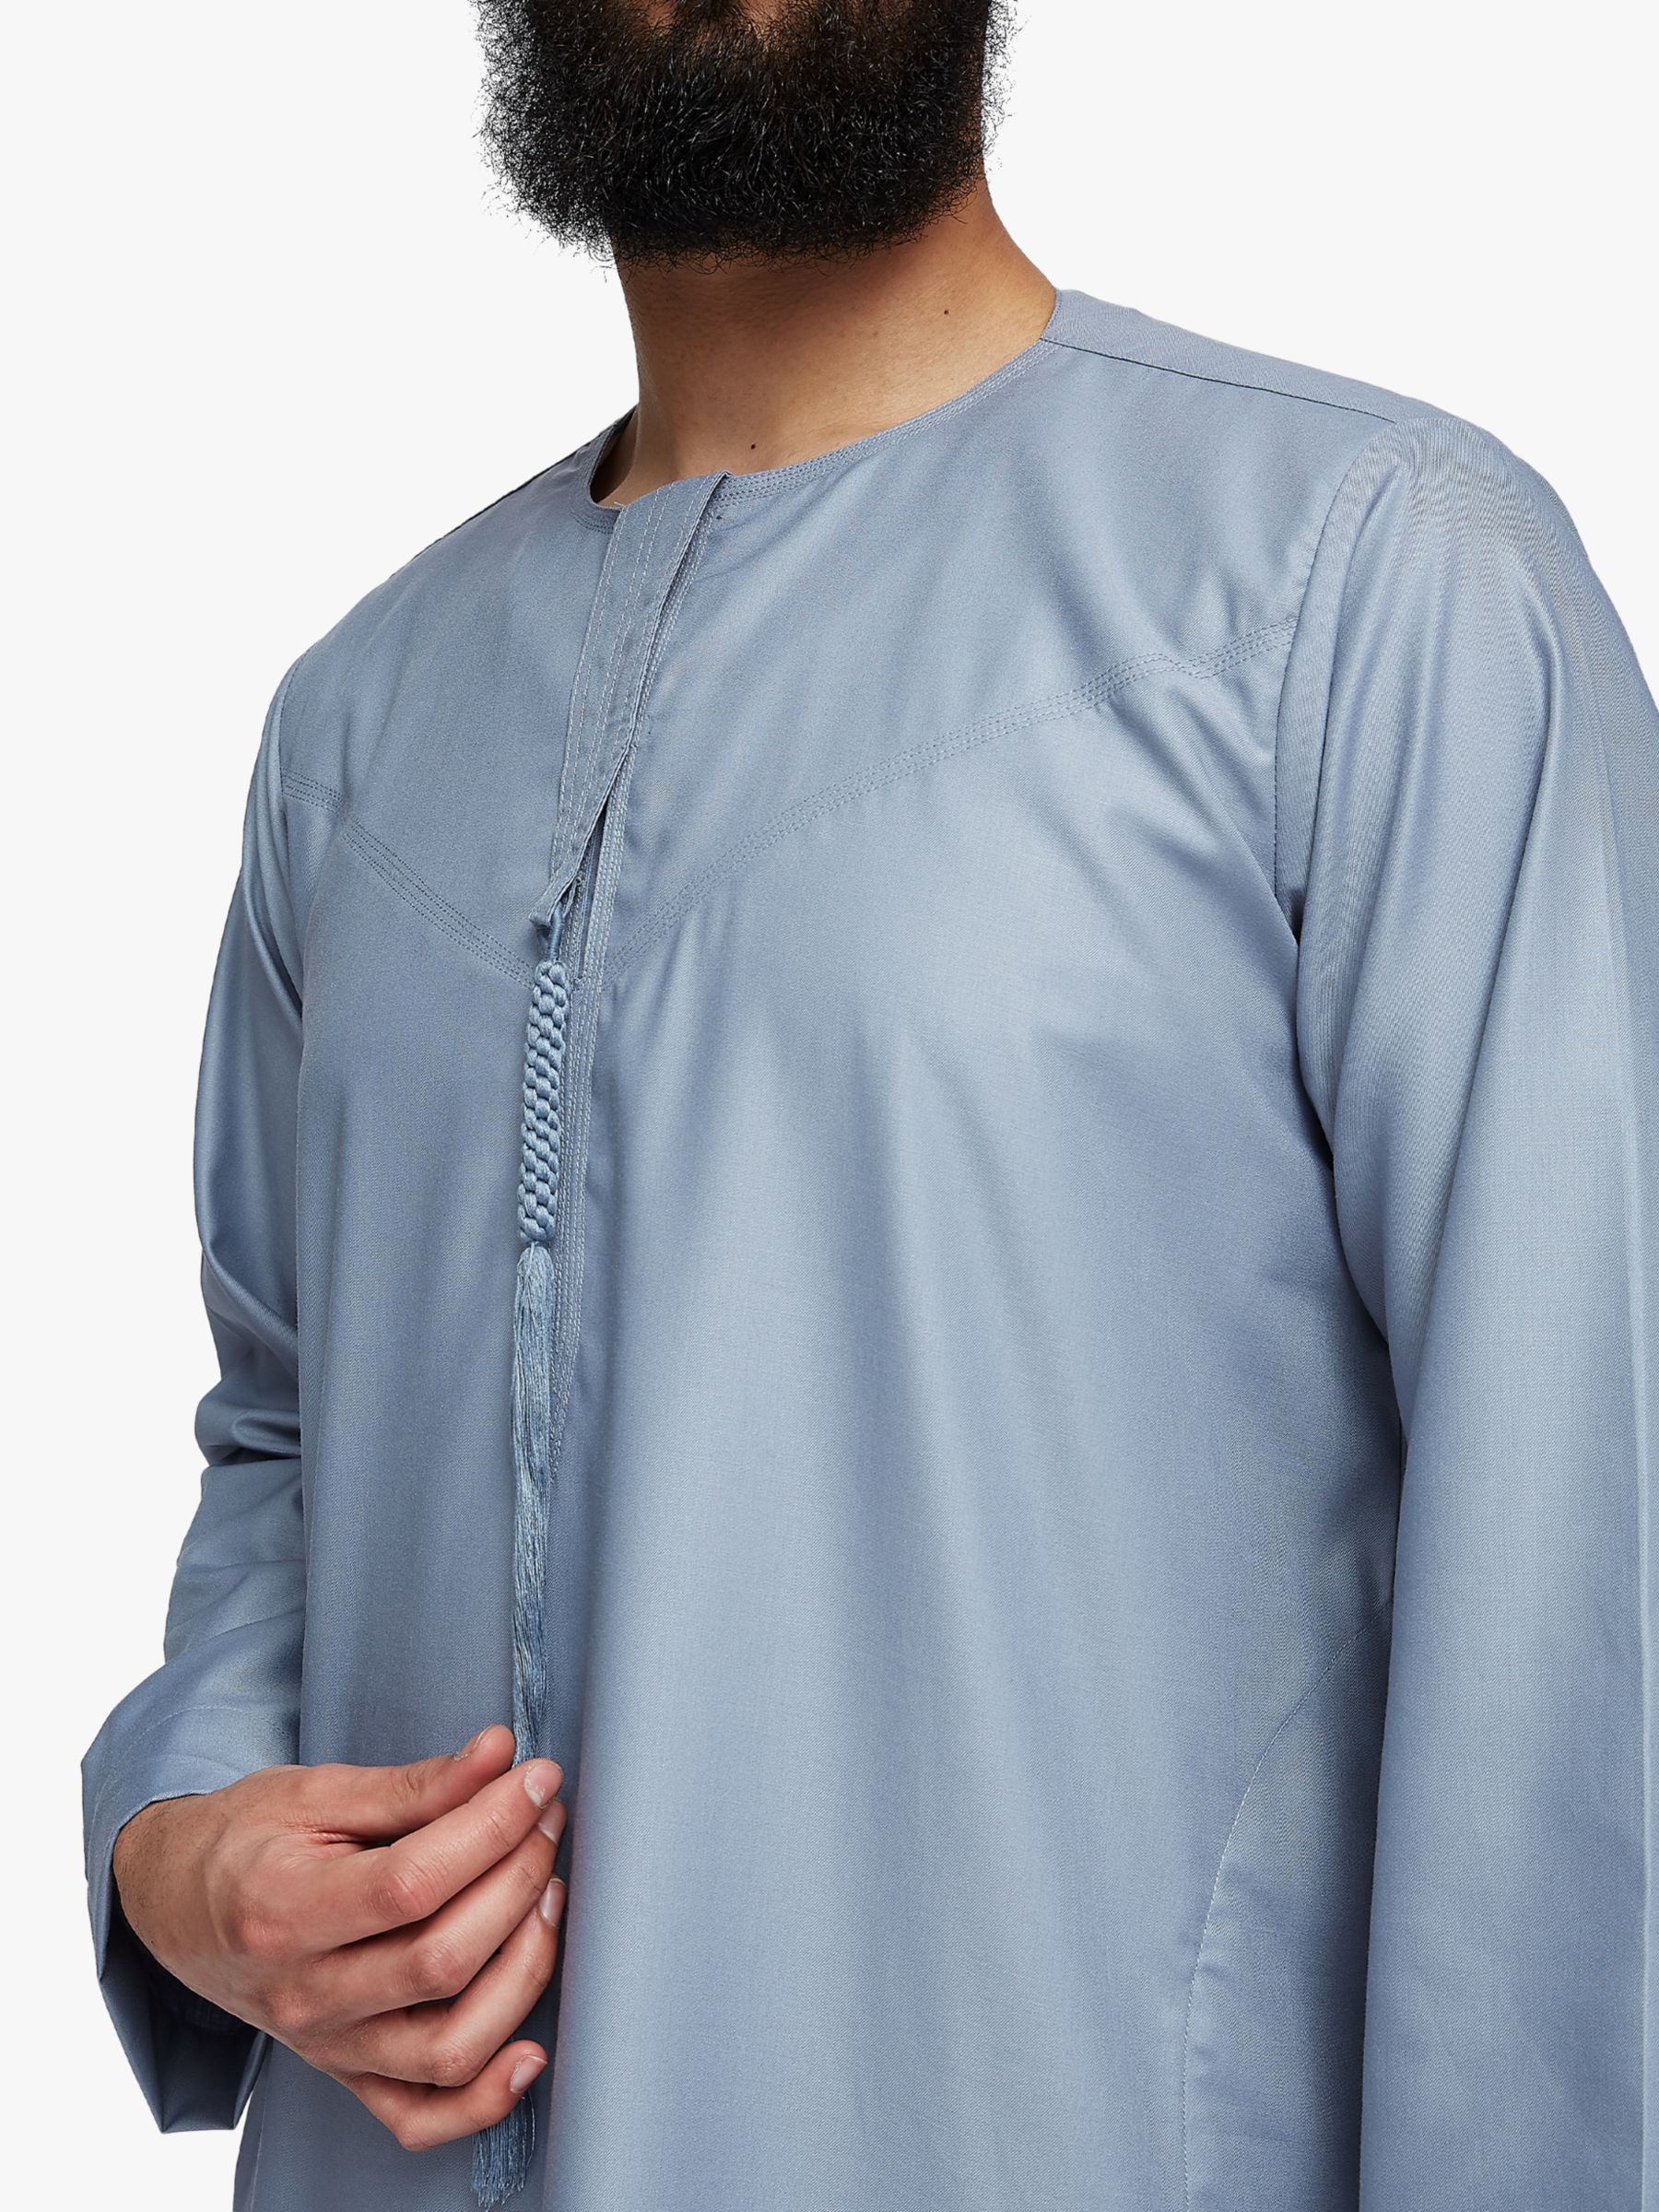 Buy Islamic Impressions Omani Thobe Jubbah Online at johnlewis.com